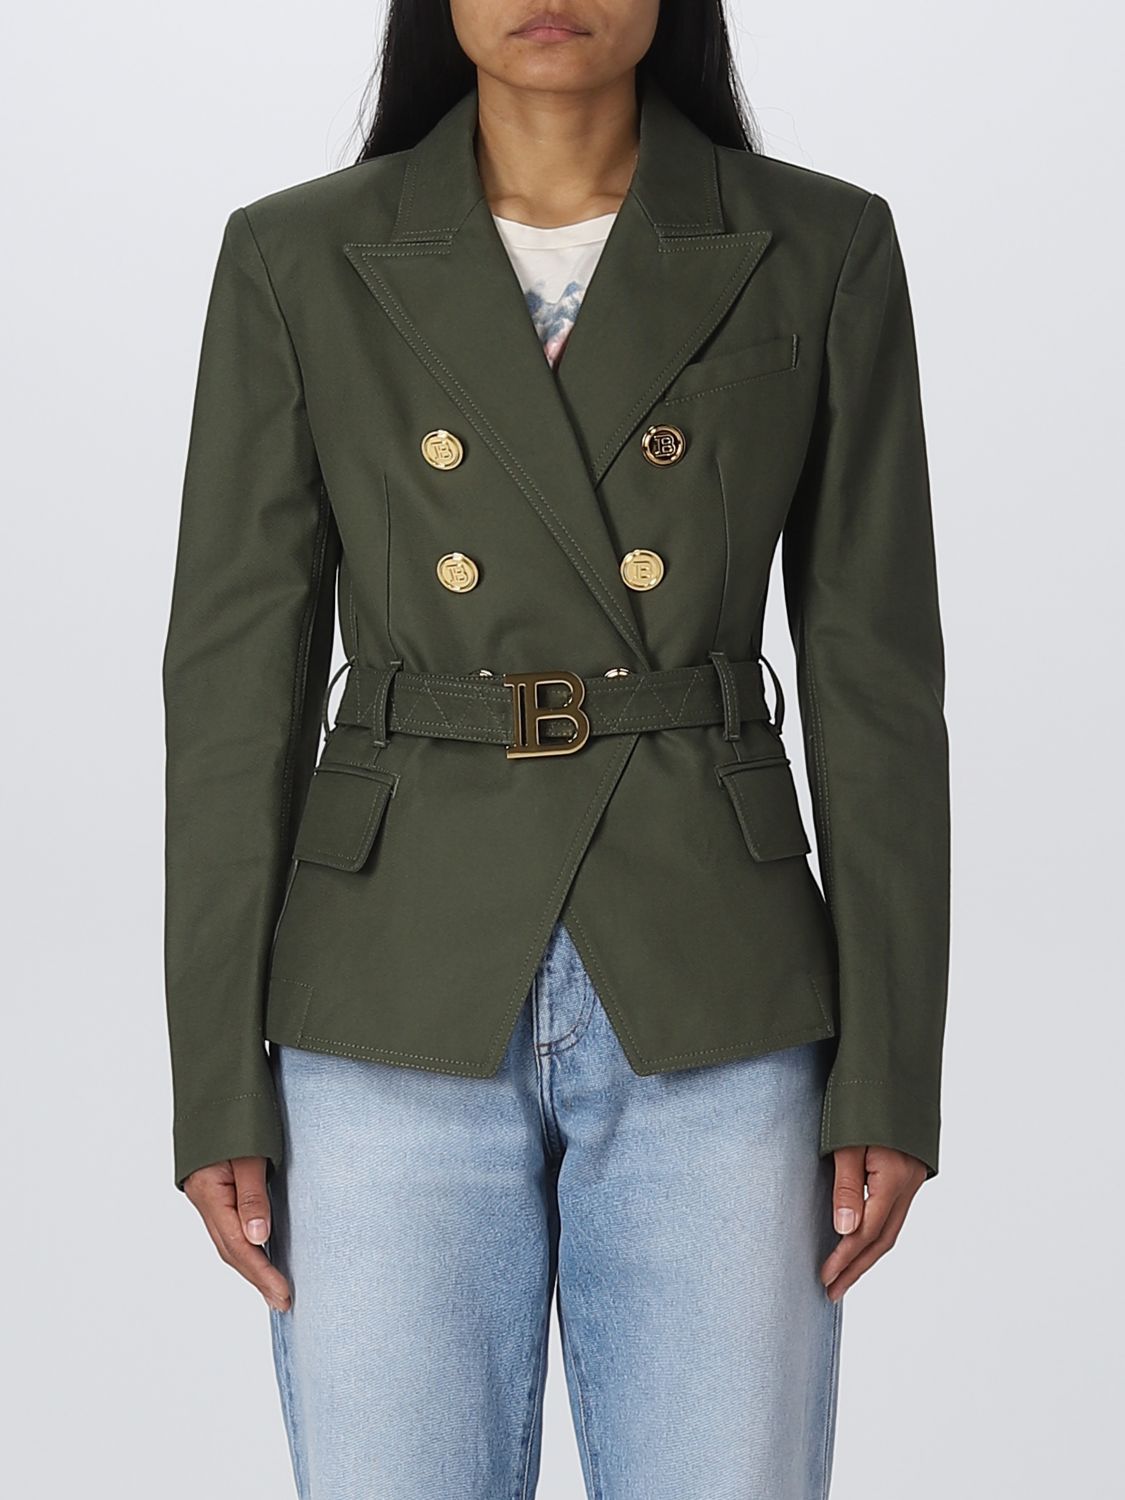 reactie Goot Savant BALMAIN: Jacket woman - Green | Balmain jacket WF0SG050D152 online on  GIGLIO.COM